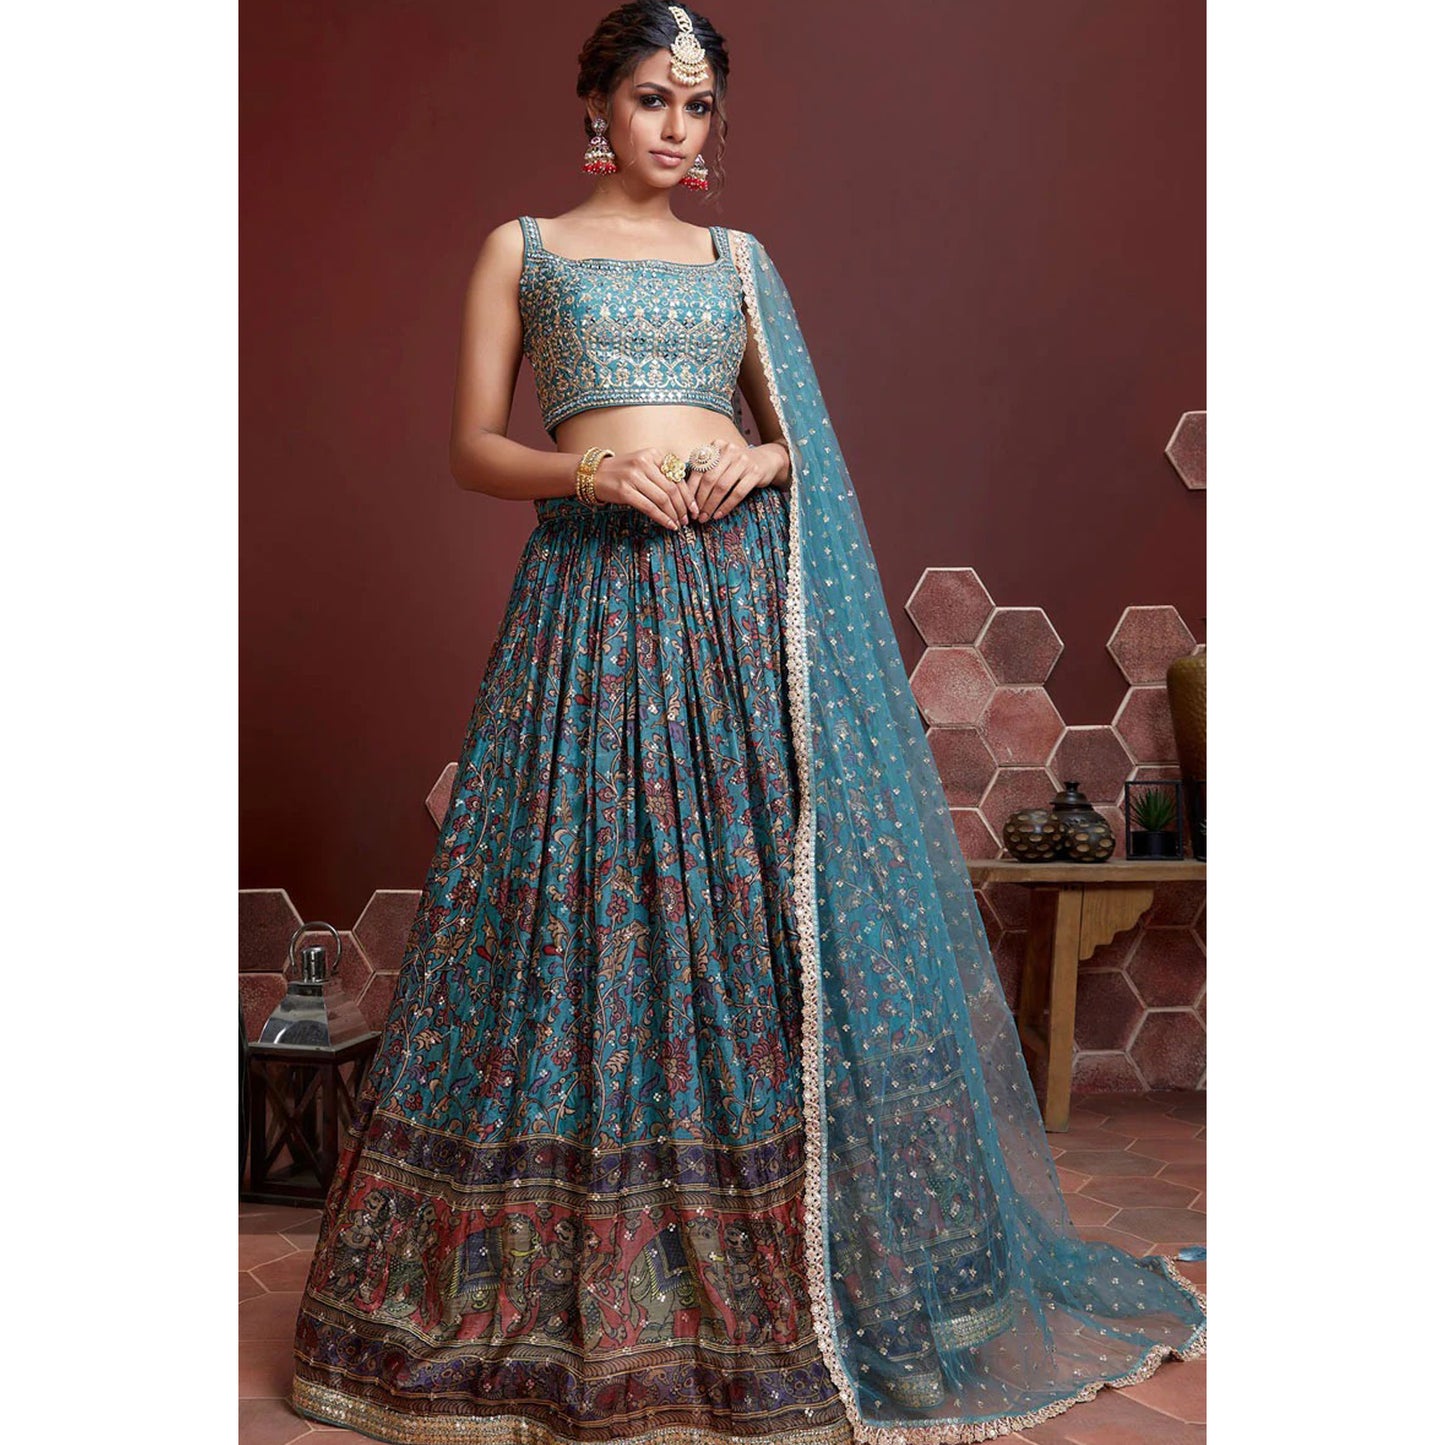 Attrective Sky Blue Color Designer Art Silk Fabric Sangeet Function Wear lehenga Choli